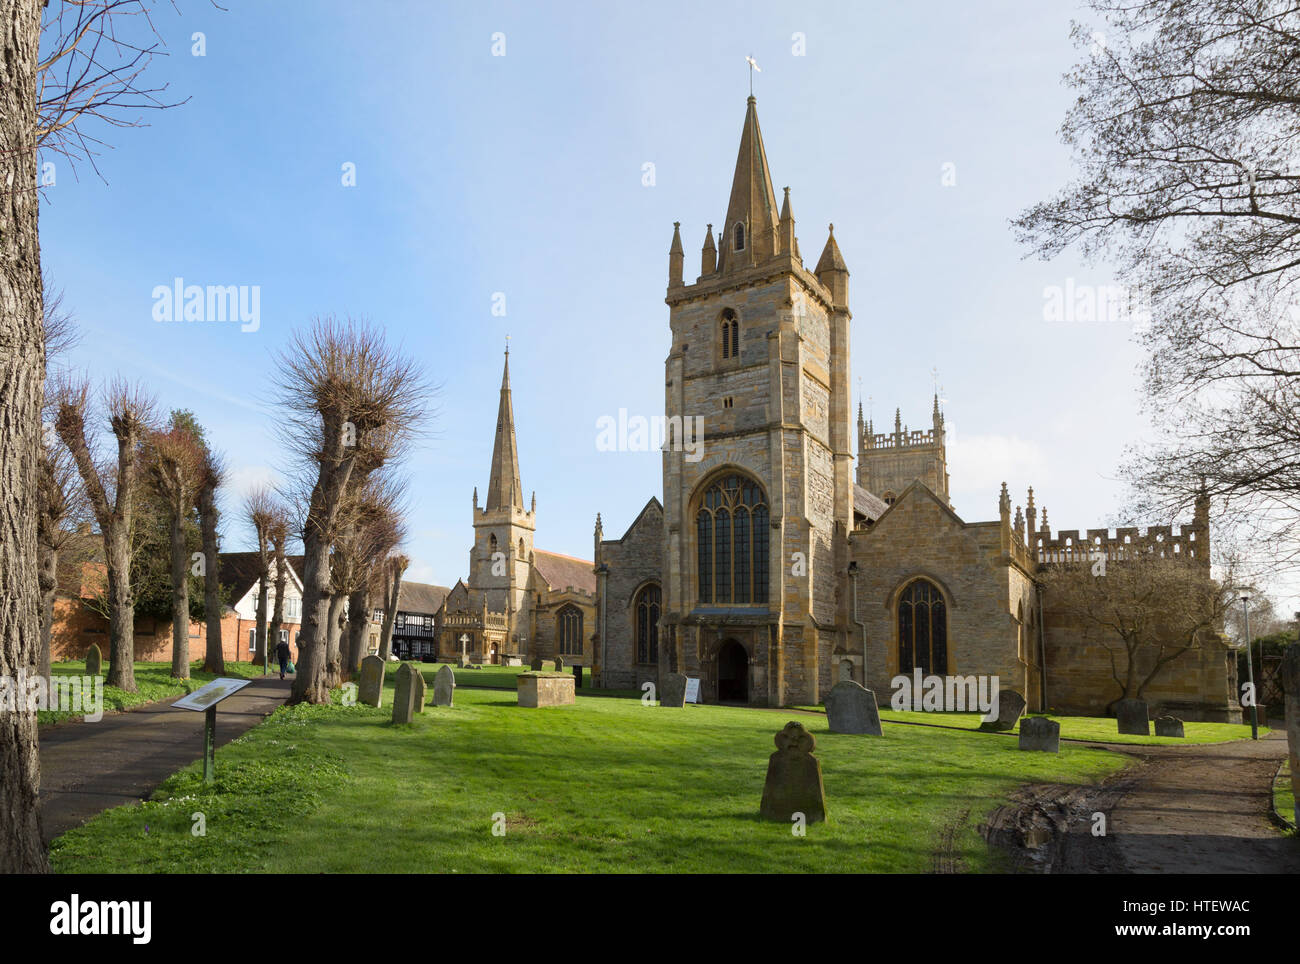 St Lawrence Church, and All Saints Churches, Evesham Abbey Gardens, Evesham, Worcestershire UK Stock Photo